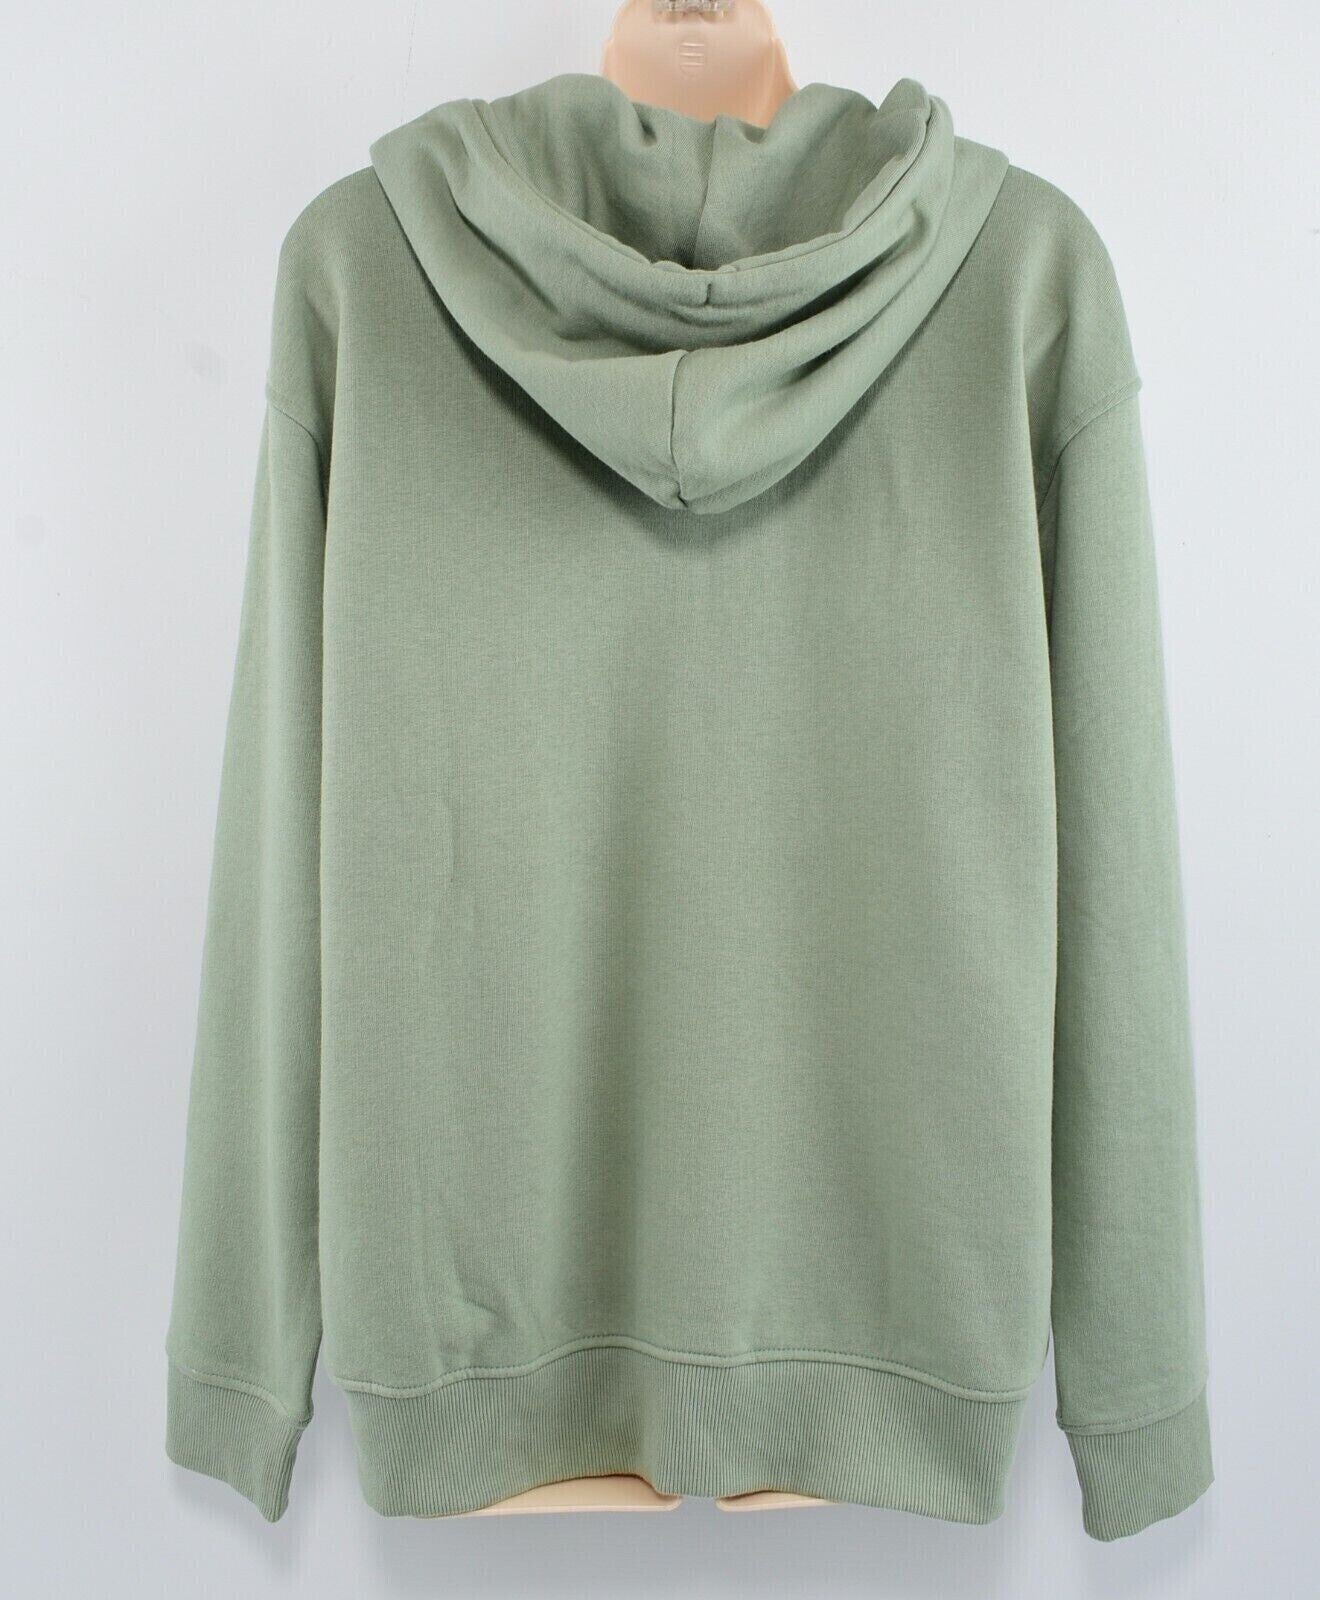 O'NEILL Women's CUBE Hoodie, Hooded Sweatshirt, Green (Lily Pad), size XS /UK 8